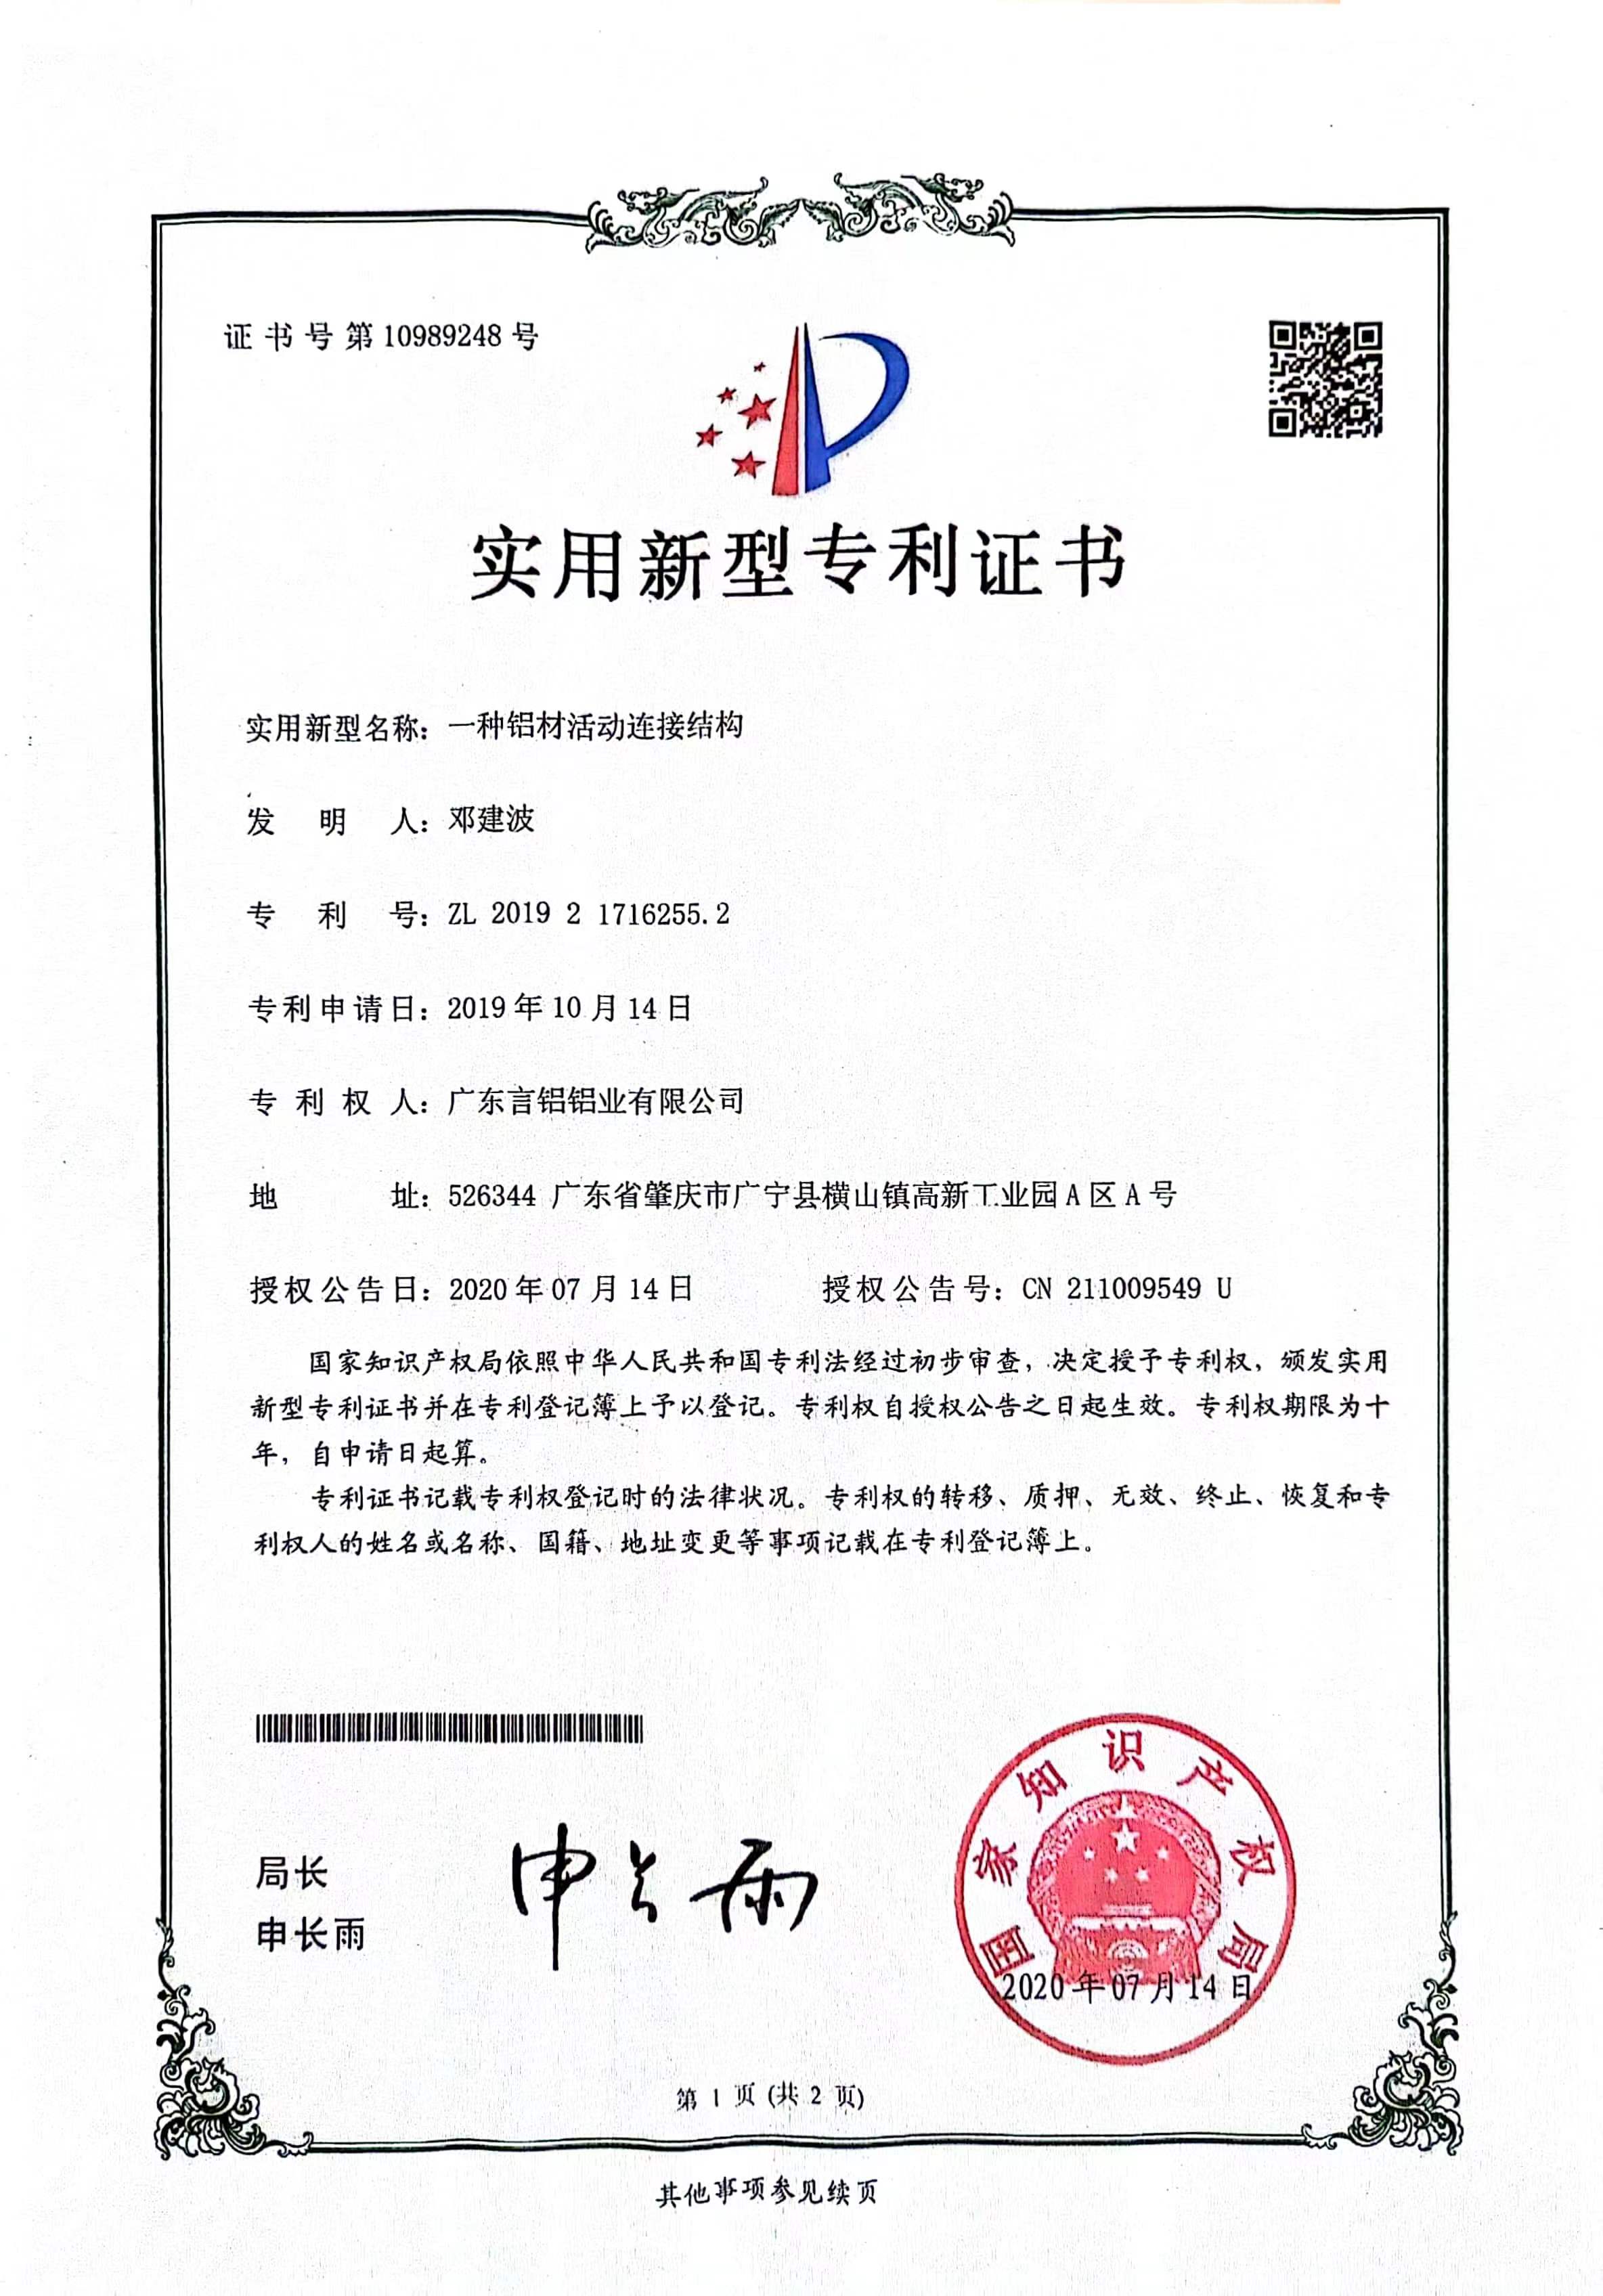 Patent certificate 5